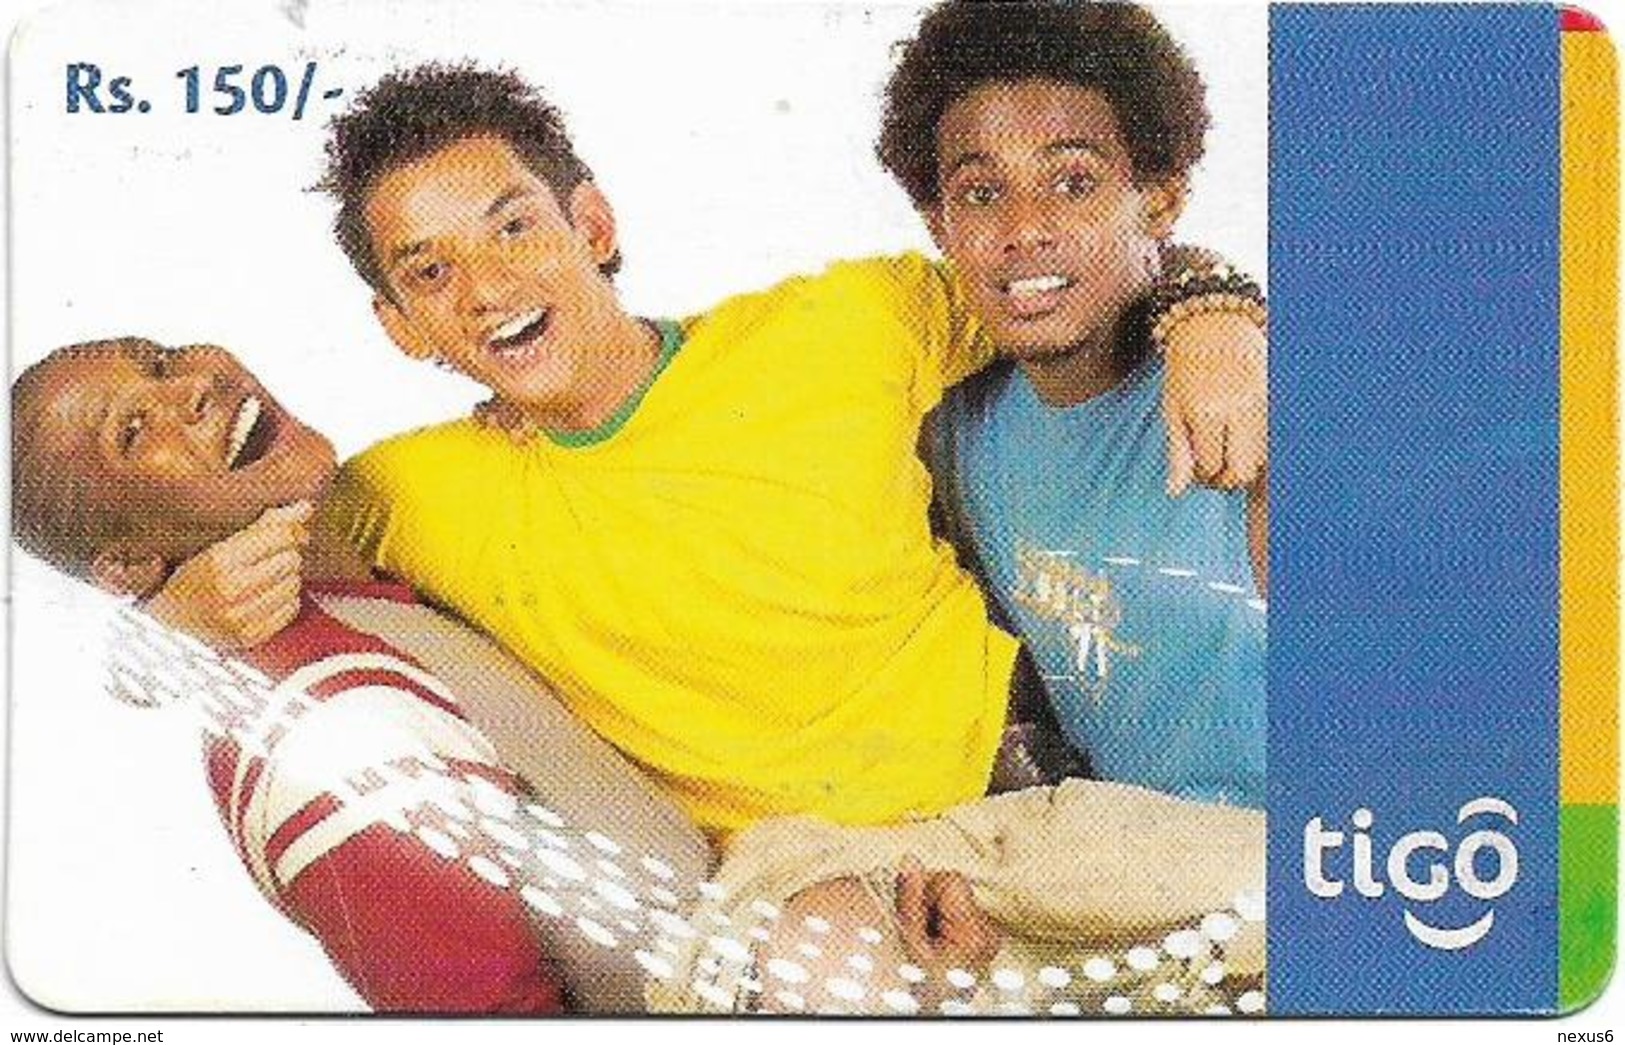 Sri Lanka - Tigo - Three Boys #2, Prepaid 150Rs, Used - Sri Lanka (Ceylon)